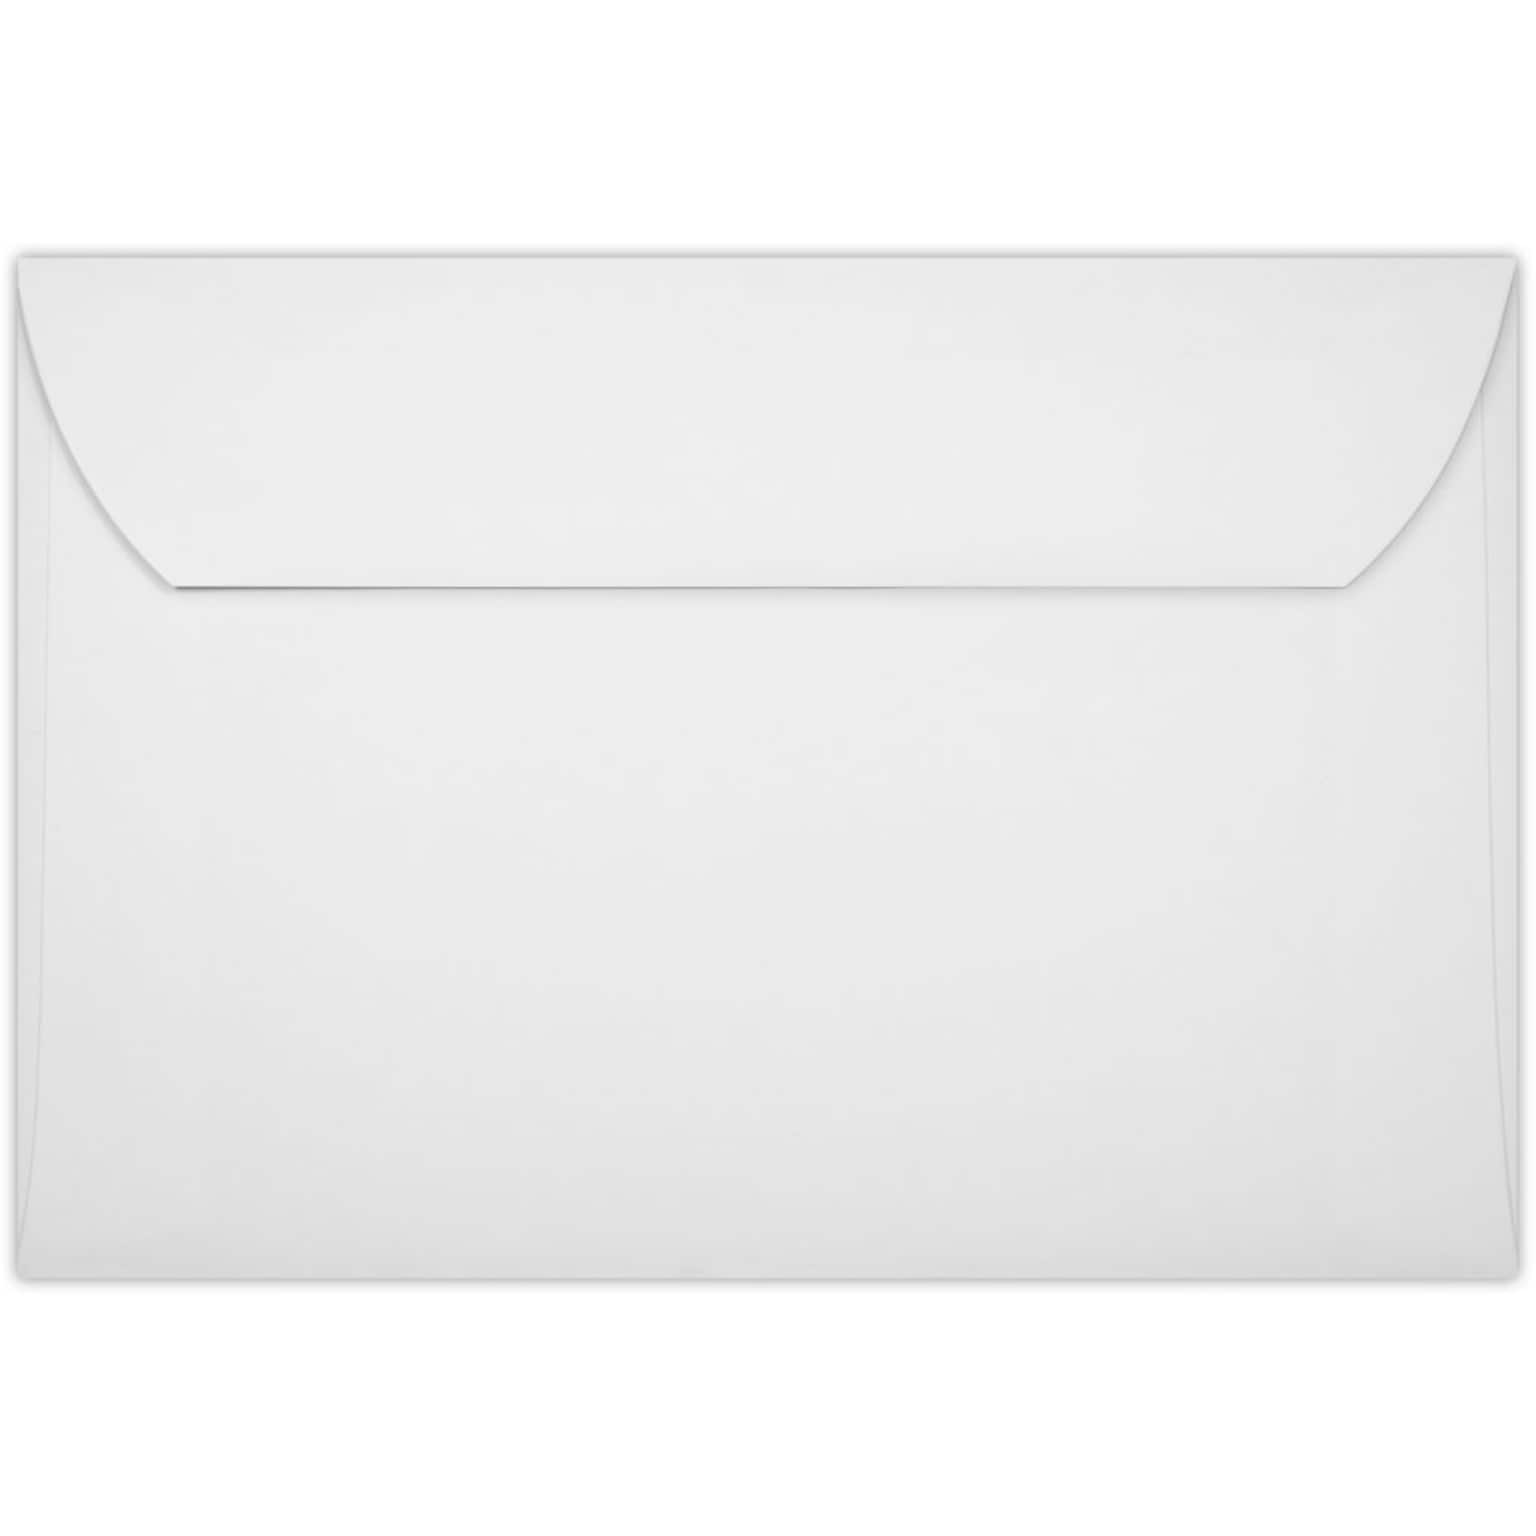 LUX A8 Envelope - 24lb. White, Machine Insertable 500/Pack, 24lb. White (A8-24WMI-500)